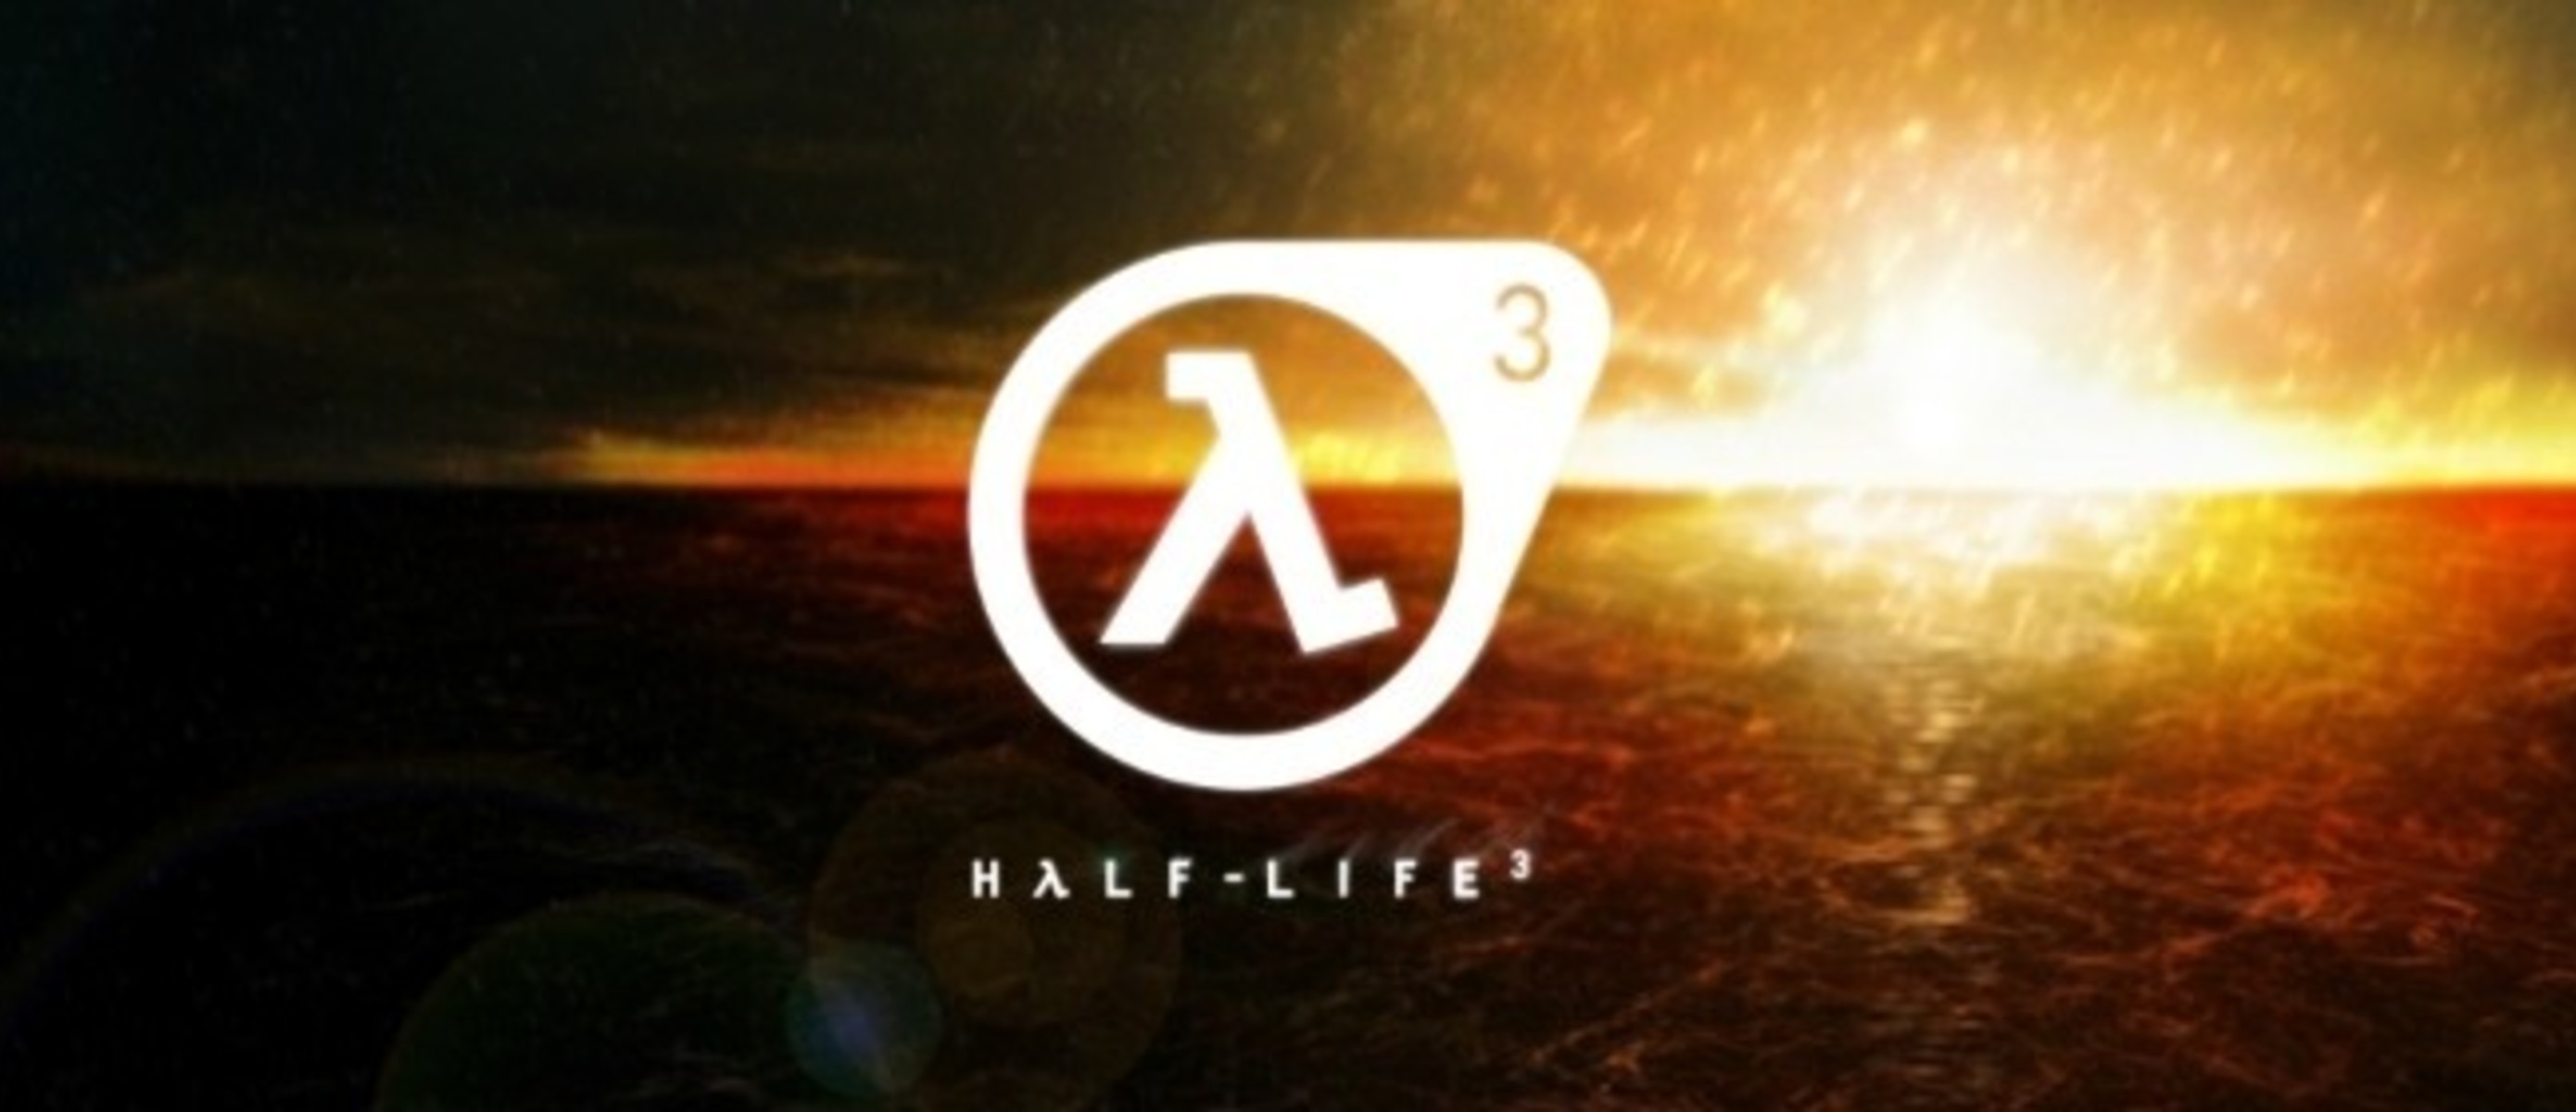 Half life collection